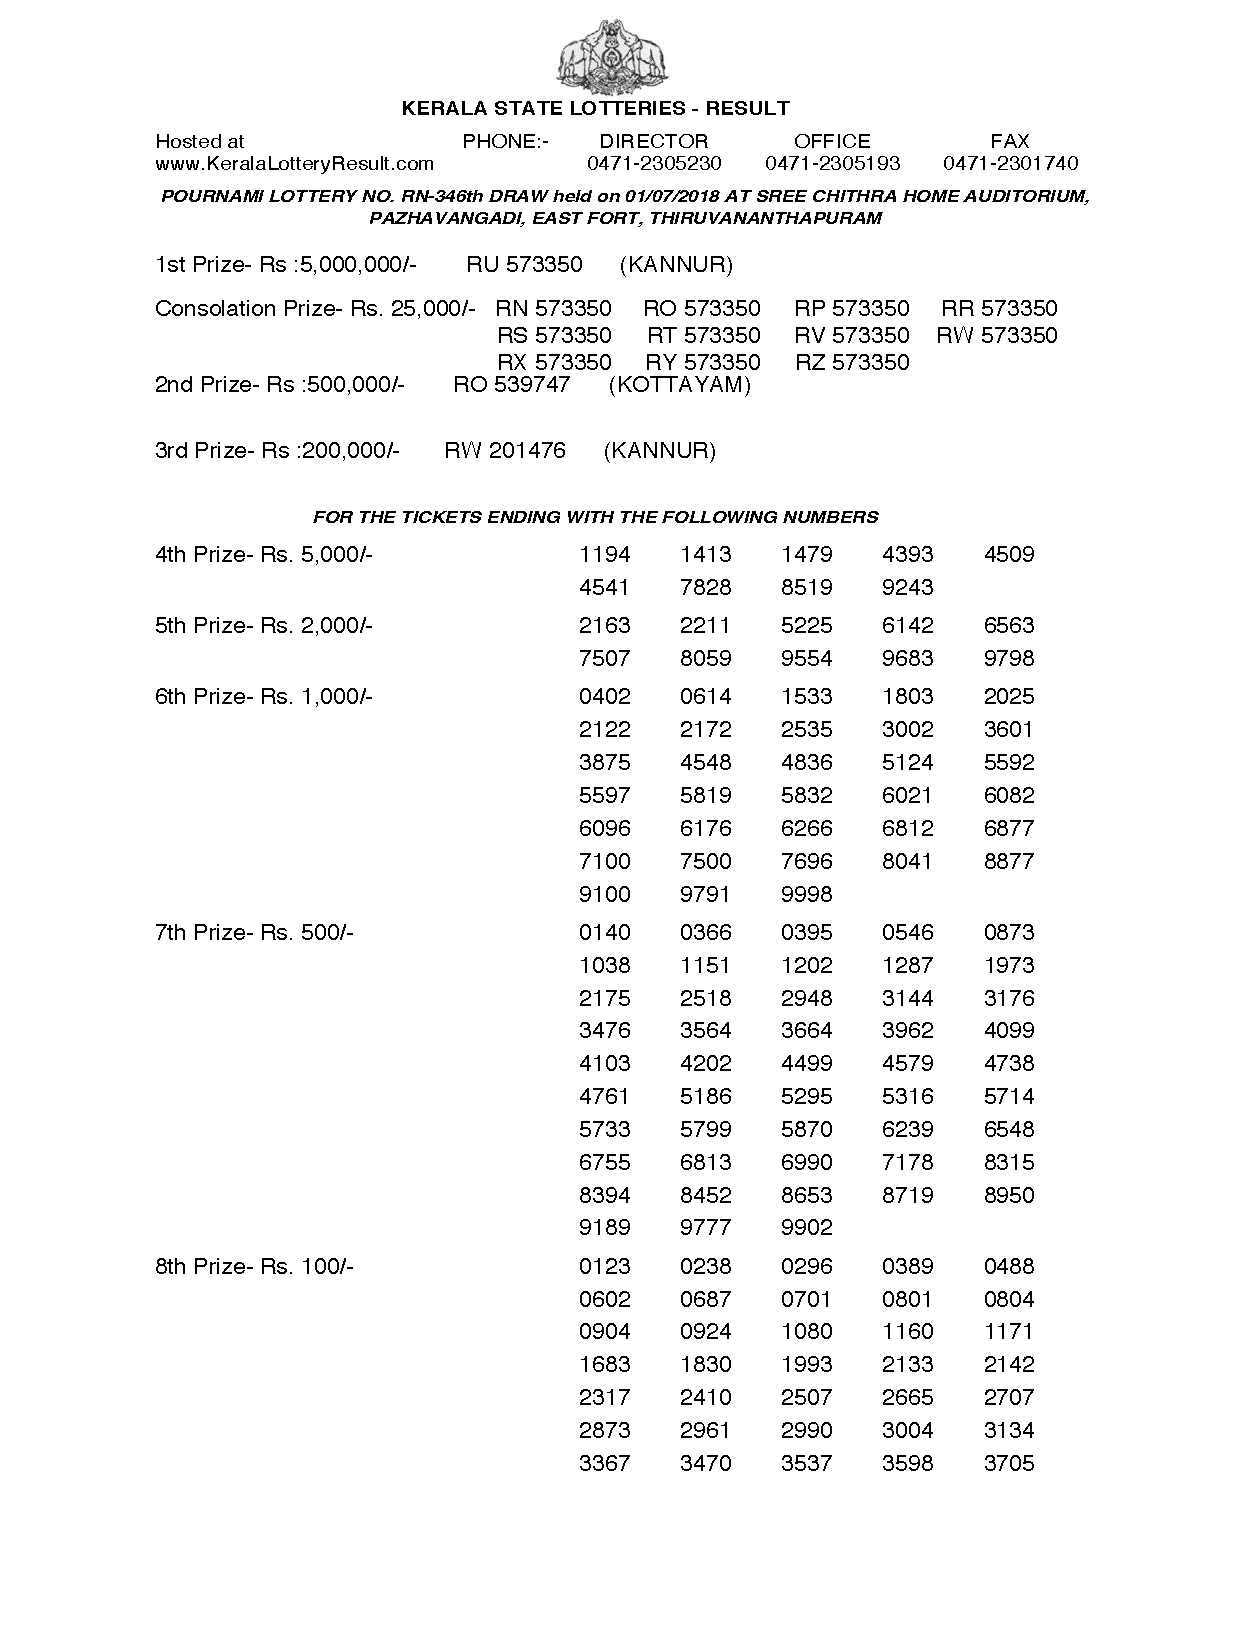 Pournami RN346 Kerala Lottery Results Screenshot: Page 1